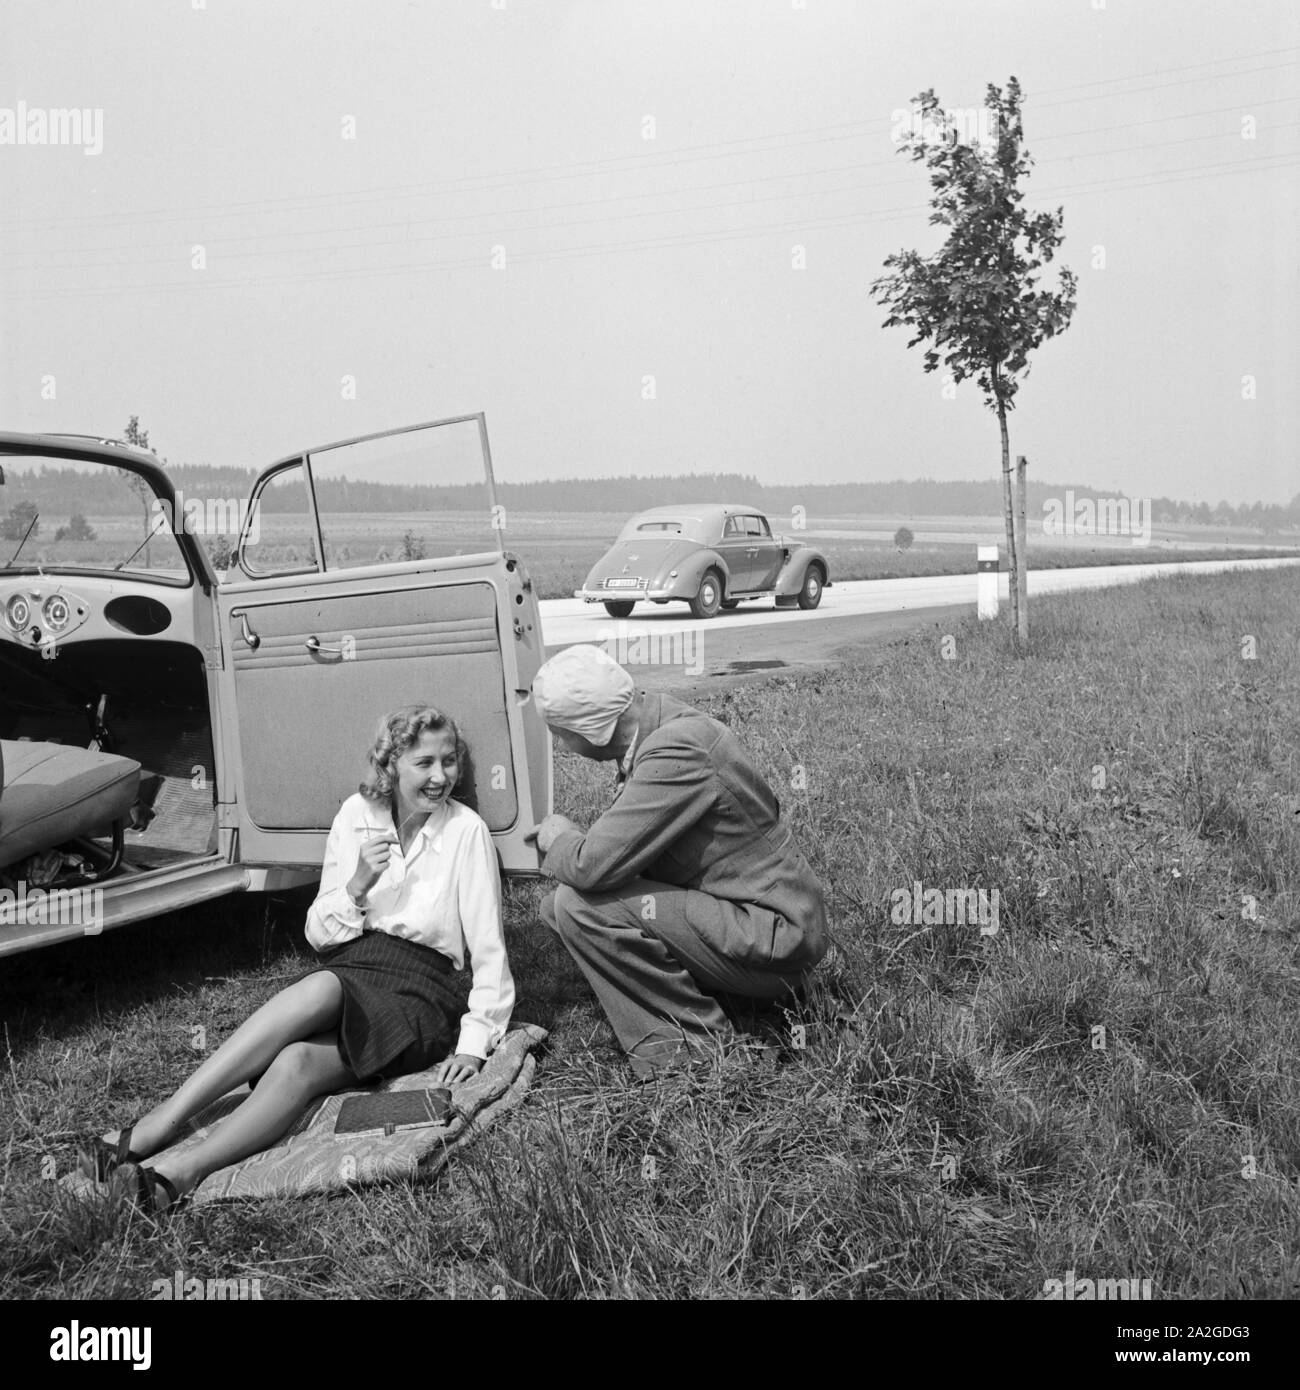 Rast am Straßenrand, Deutschland 1930er Jahre. Resting by the street, Germany 1930s. Stock Photo